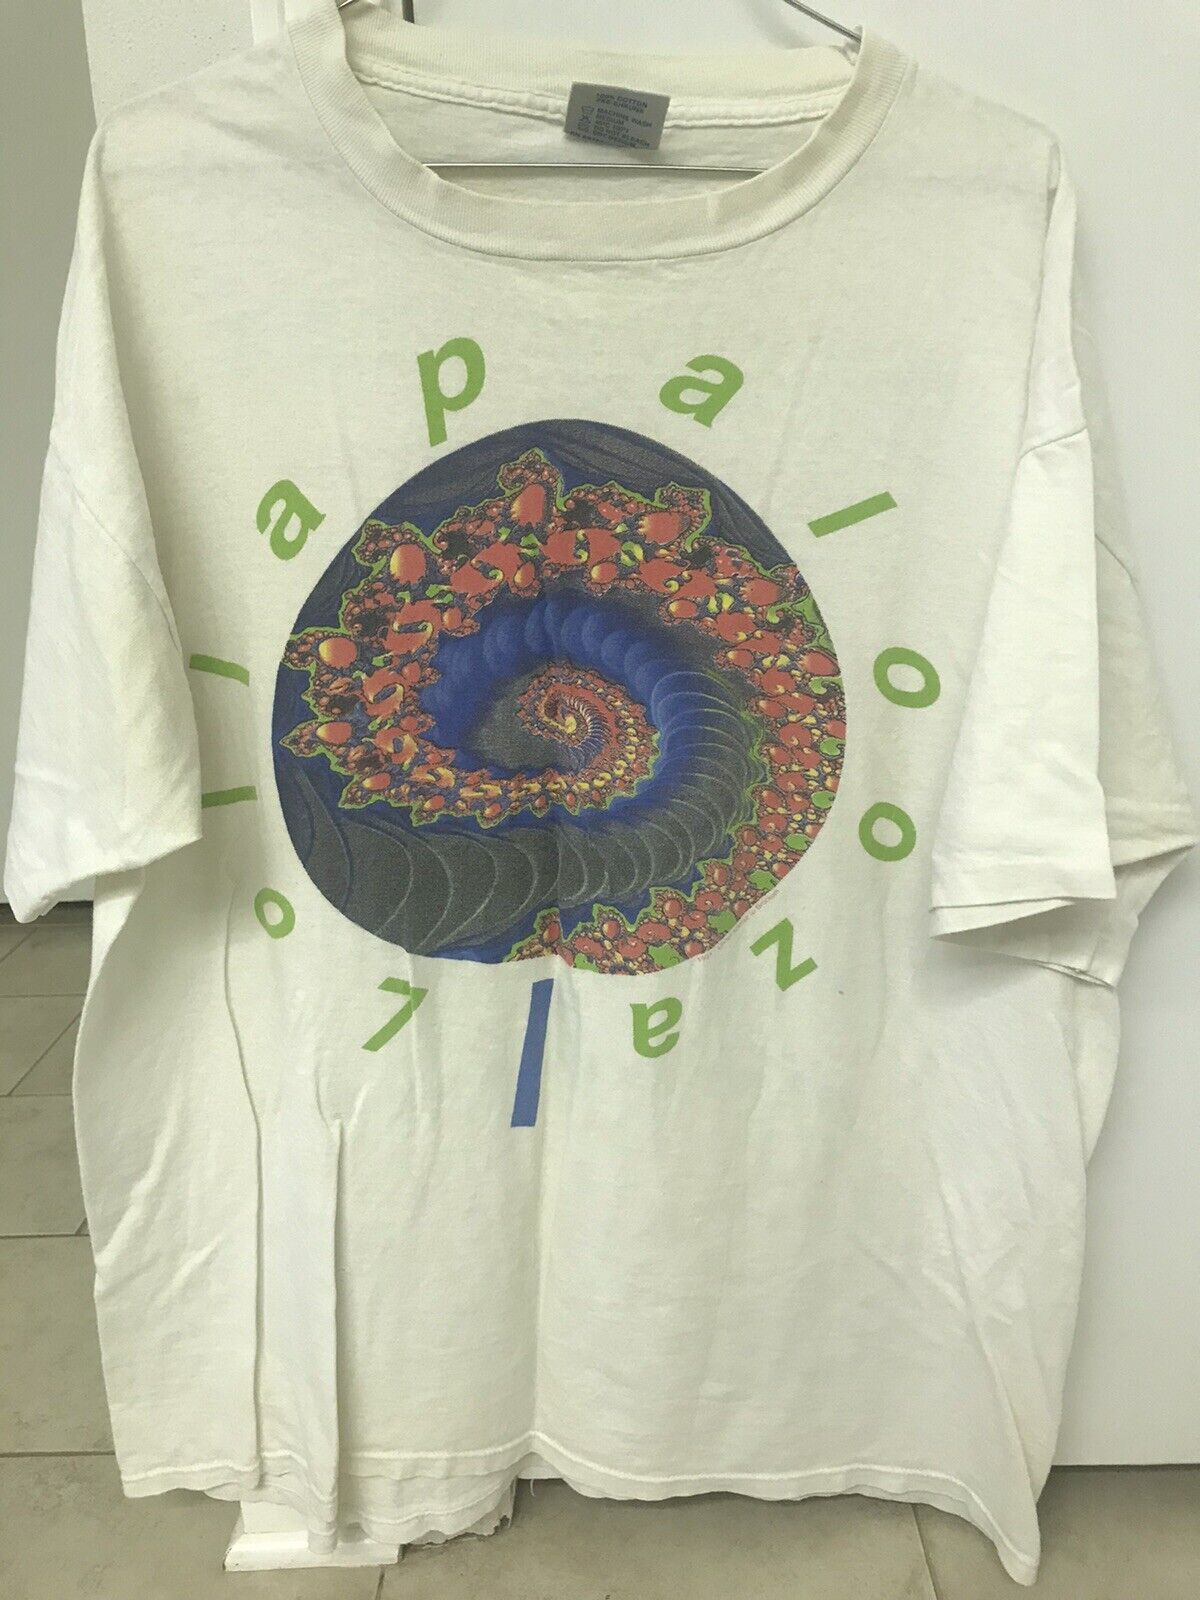 lollapalooza original concert shirt vintage 1991 … - image 2